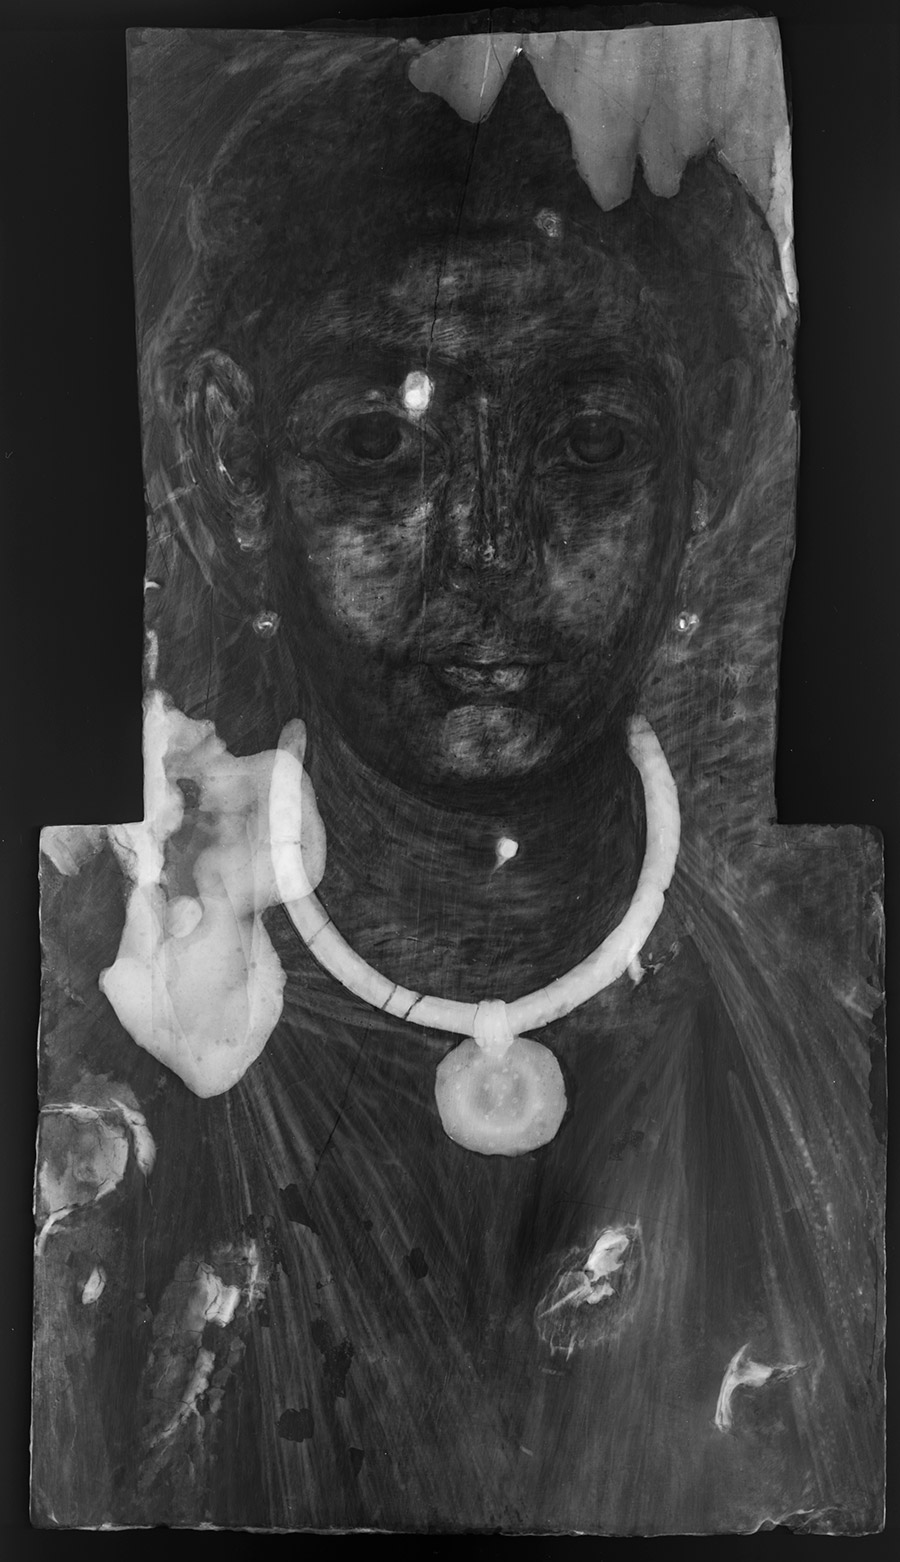 X-ray image of a mummy portrait.